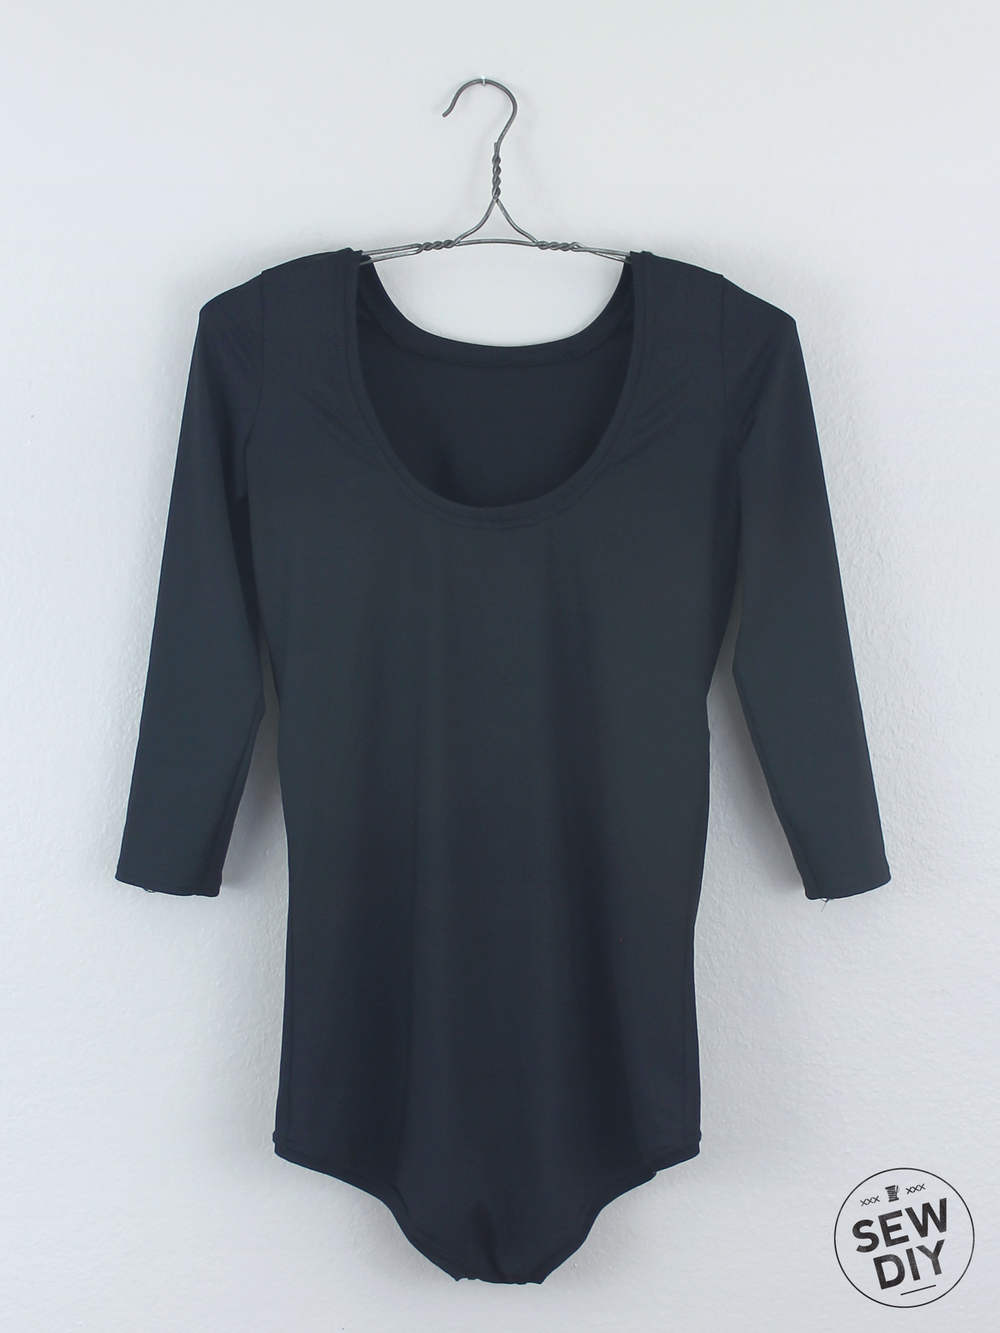 DIY Black Scoop Back Nettie Bodysuit — Sew DIY